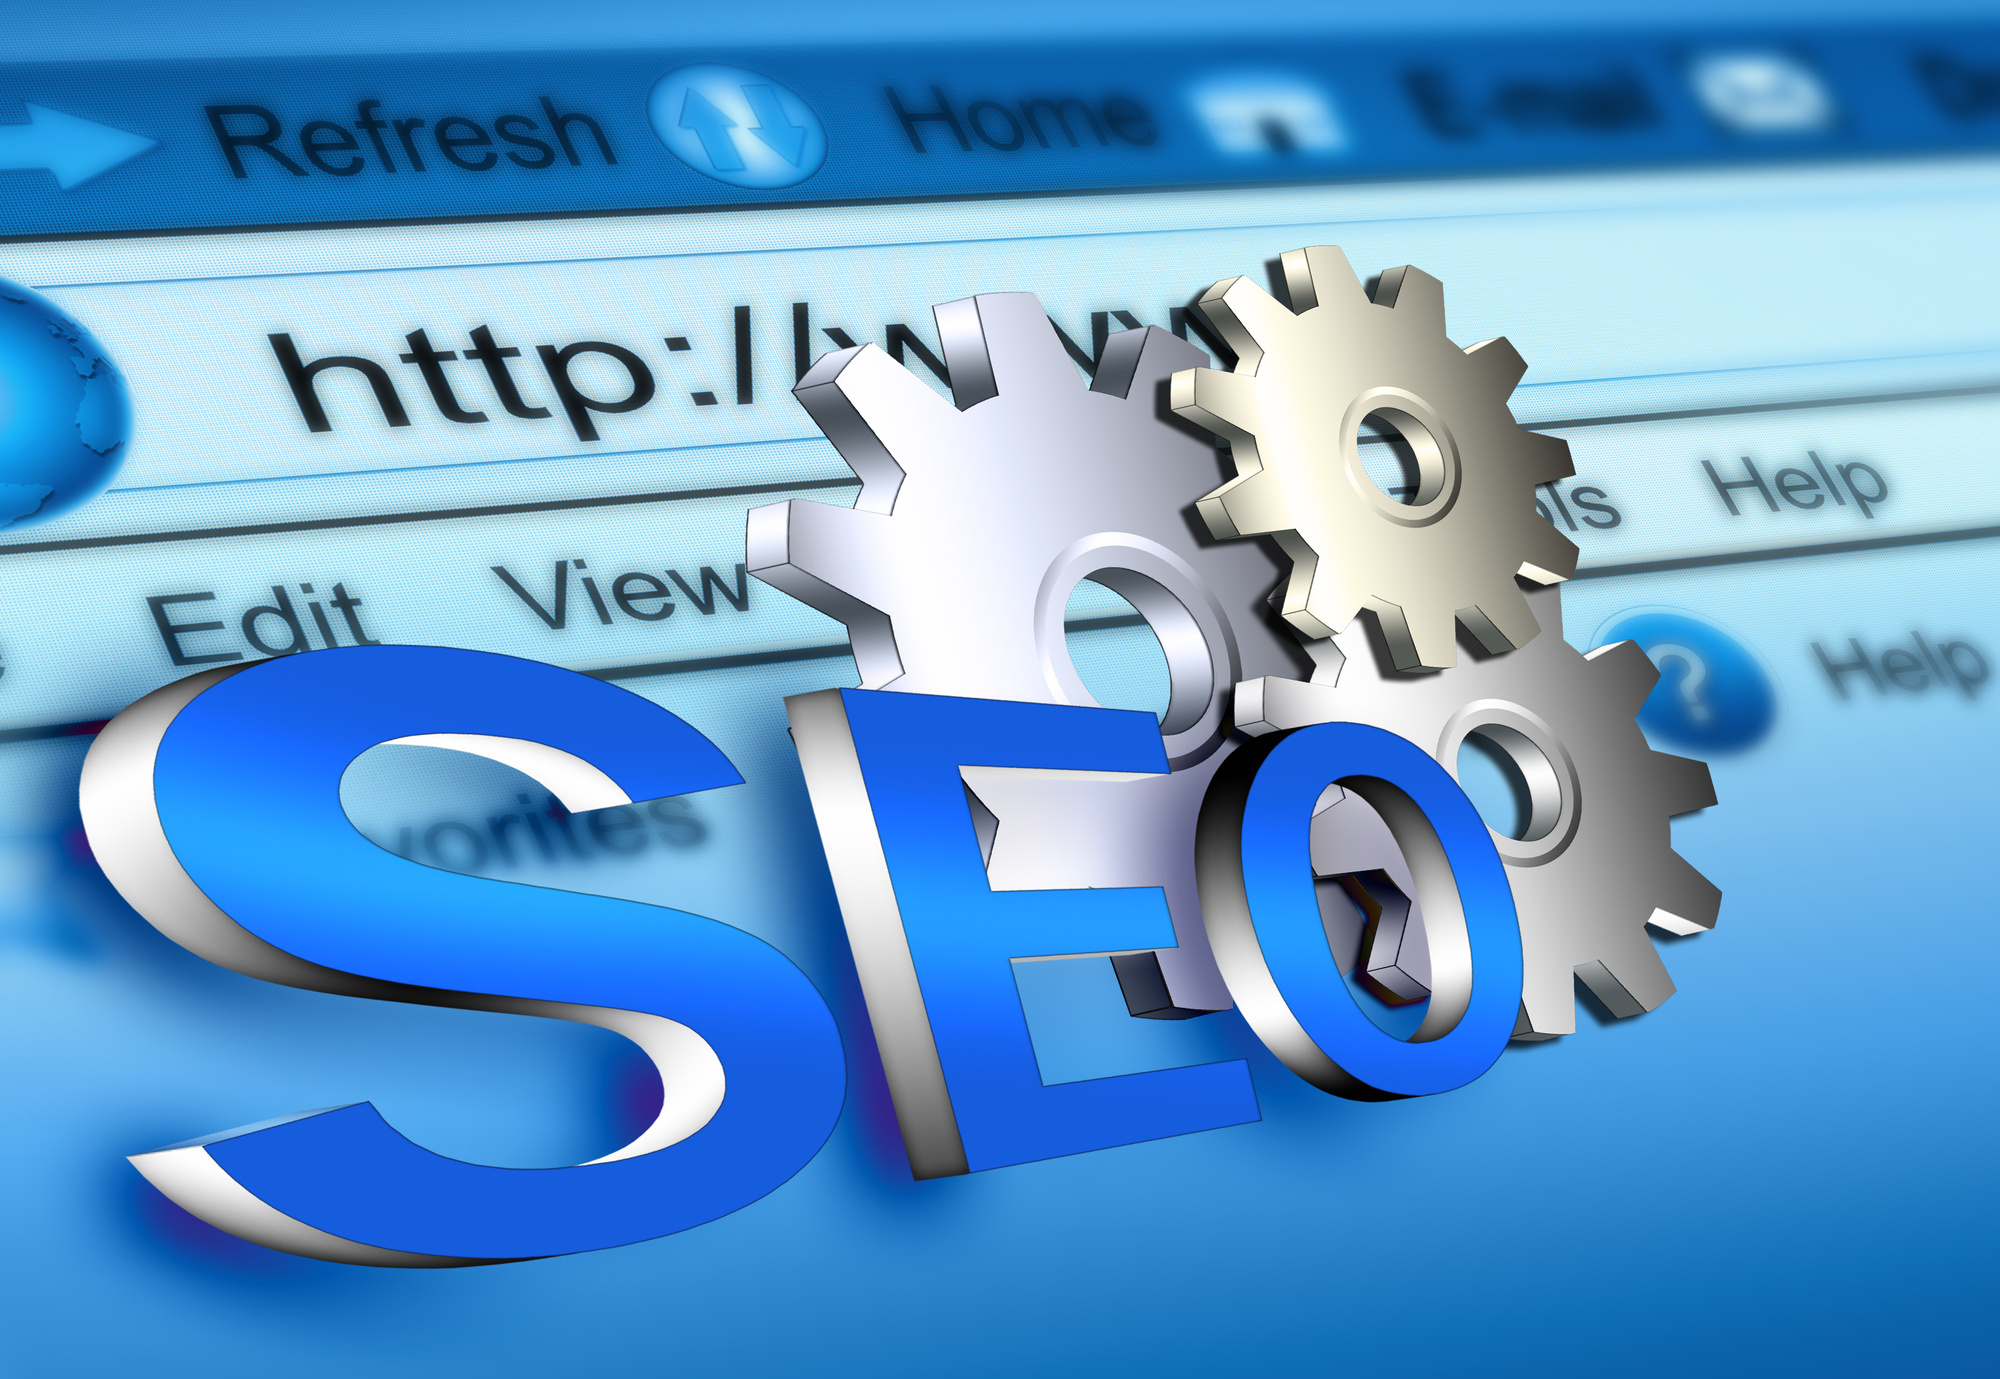 Benefits Of SEO: Search Engine Optimization